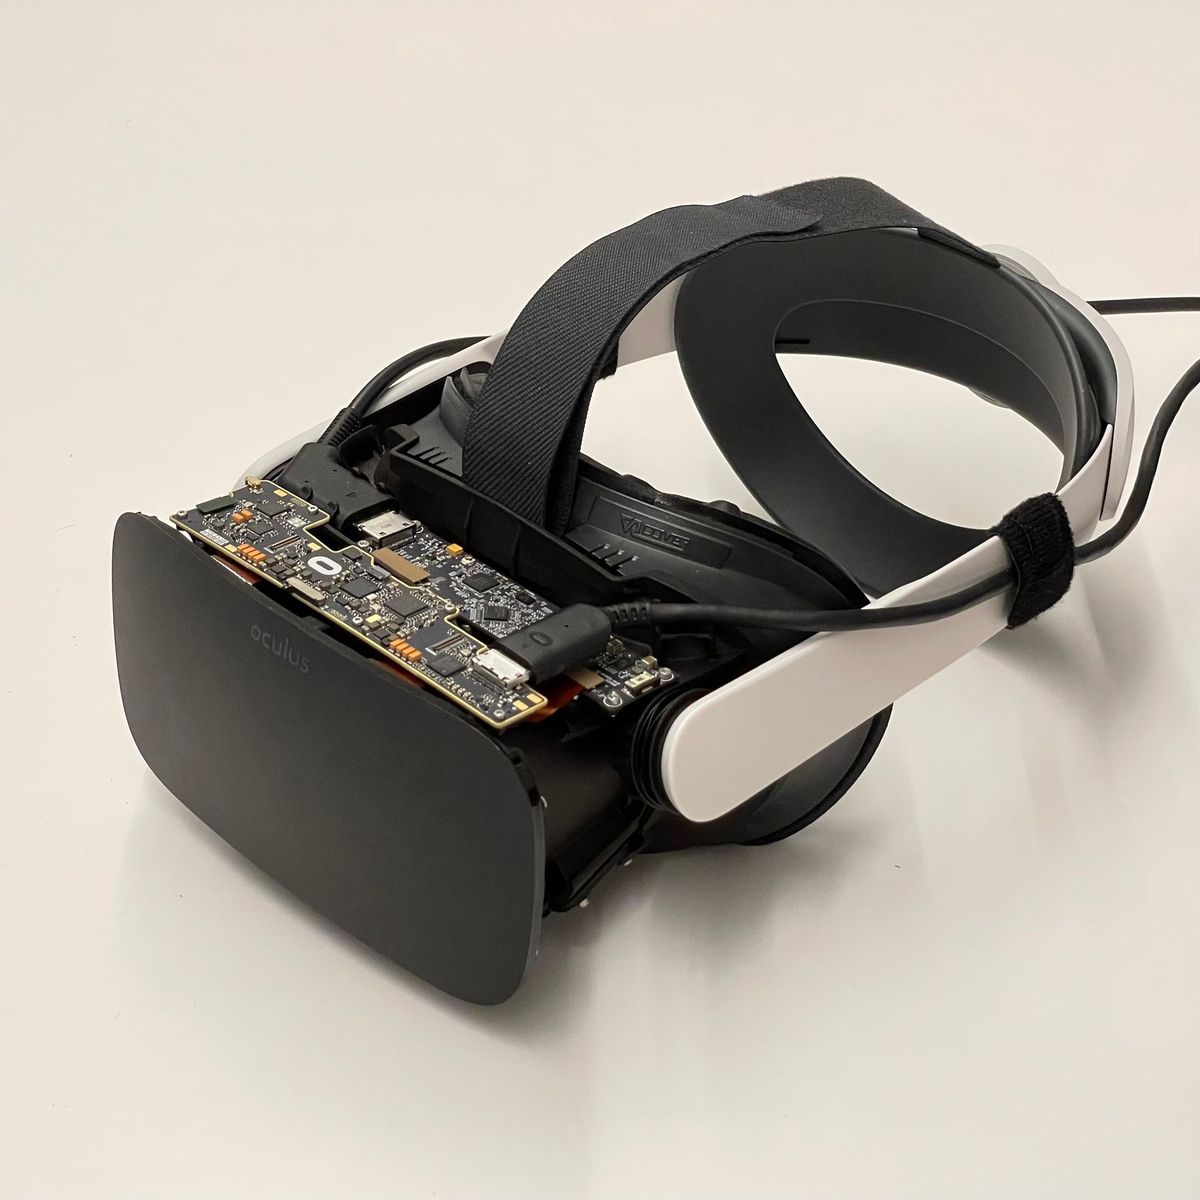 Fone de ouvido VR preto com tela HD personalizada.